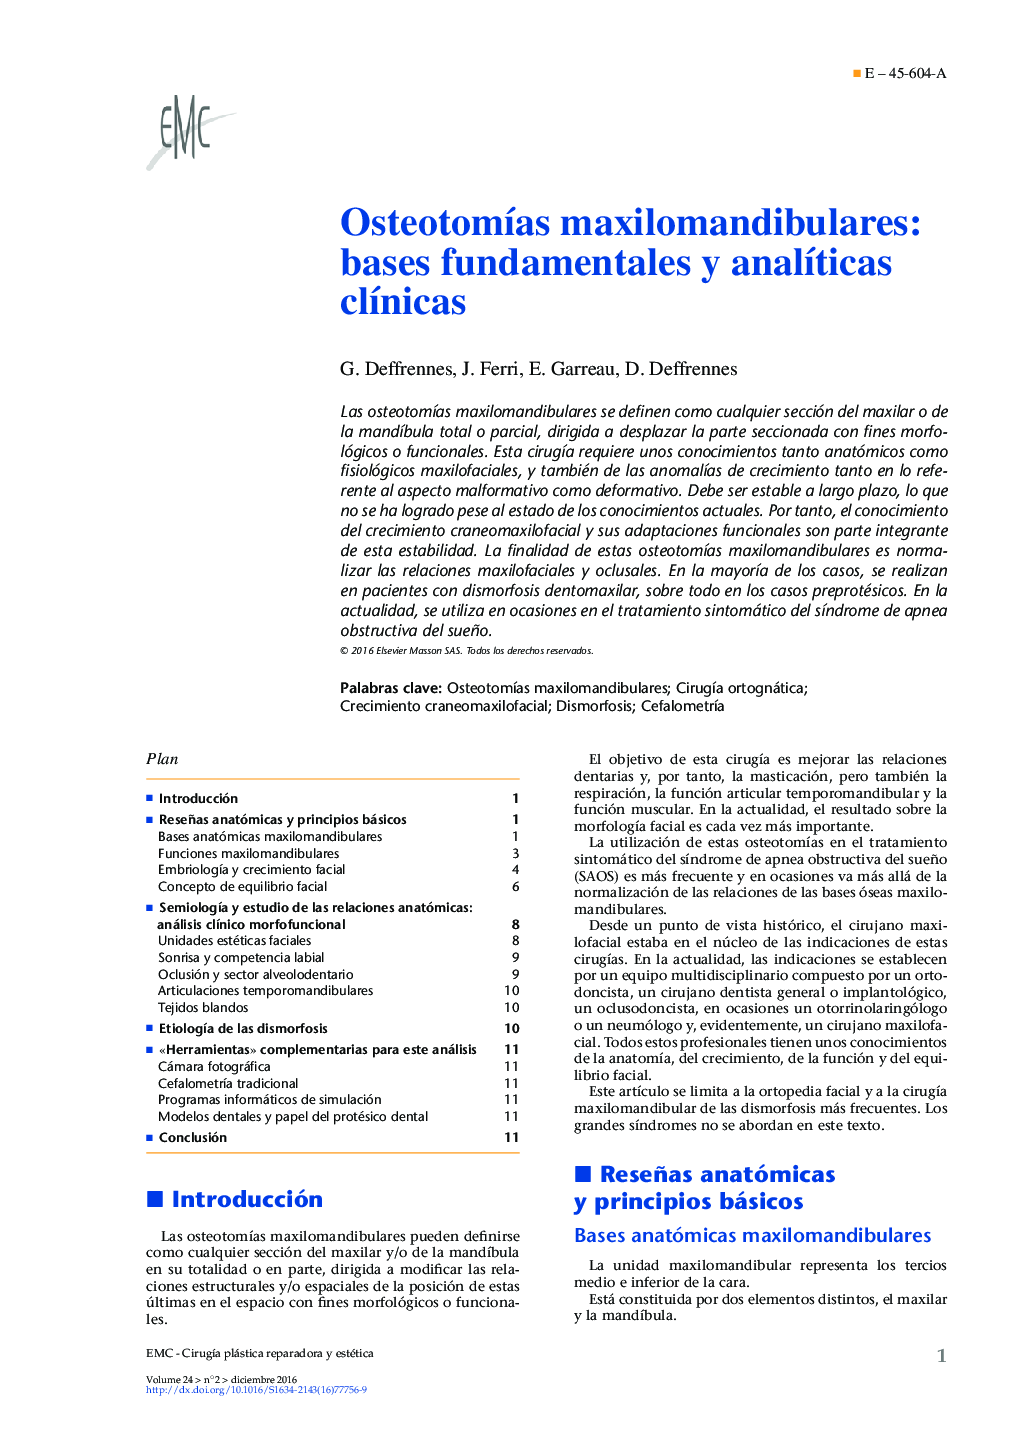 OsteotomÃ­as maxilomandibulares: bases fundamentales y analÃ­ticas clÃ­nicas